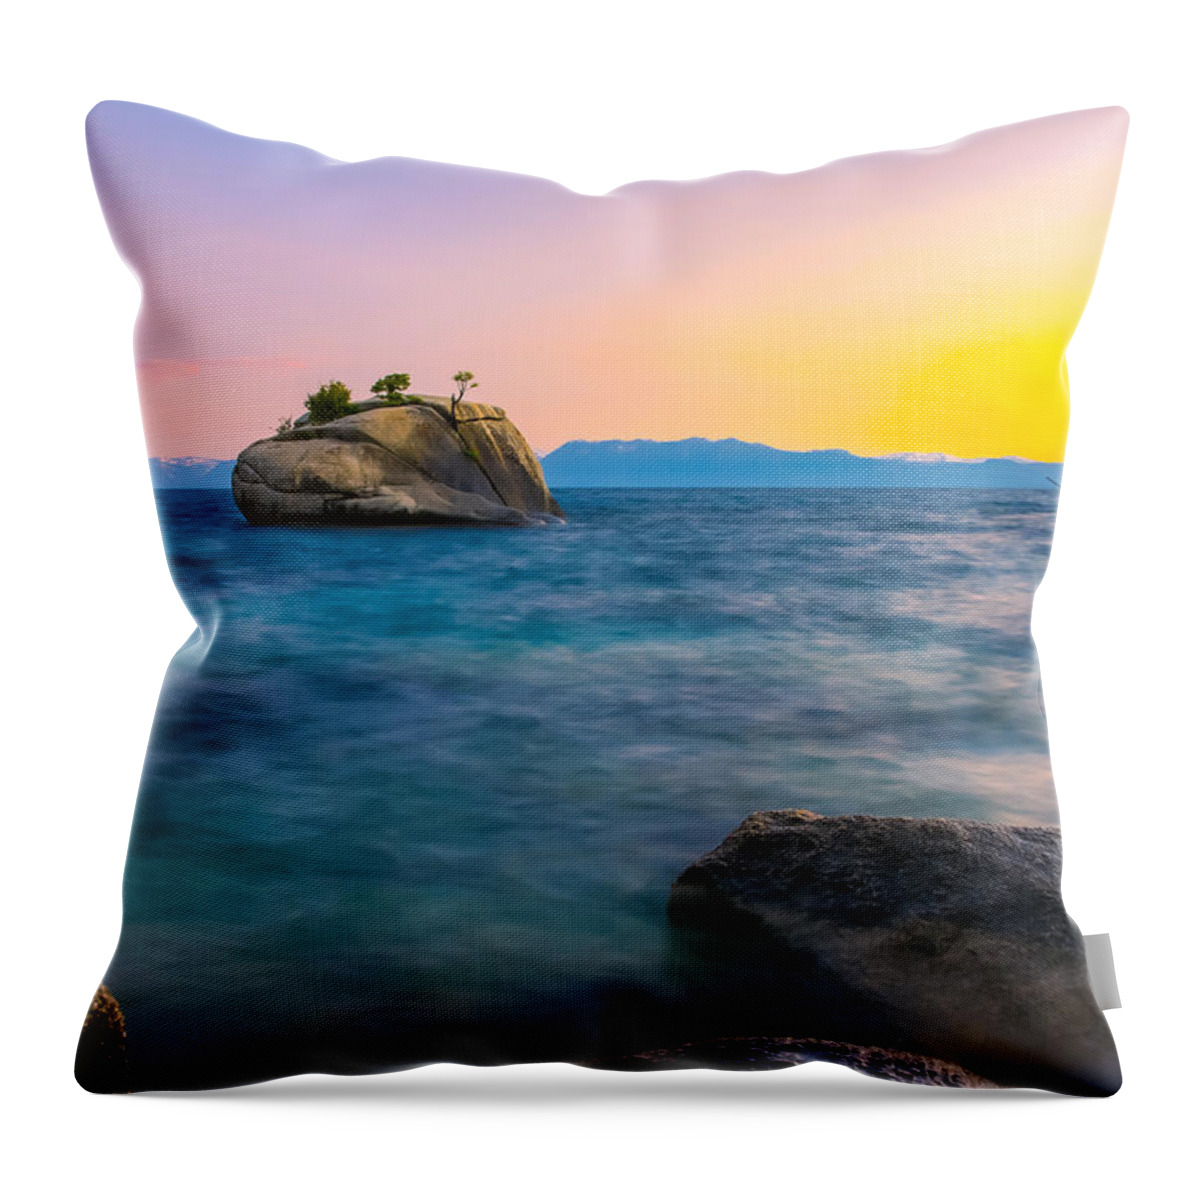 Bonsai Rock Throw Pillow featuring the photograph Bonsai Rock Sunset by Ryan Workman Photography